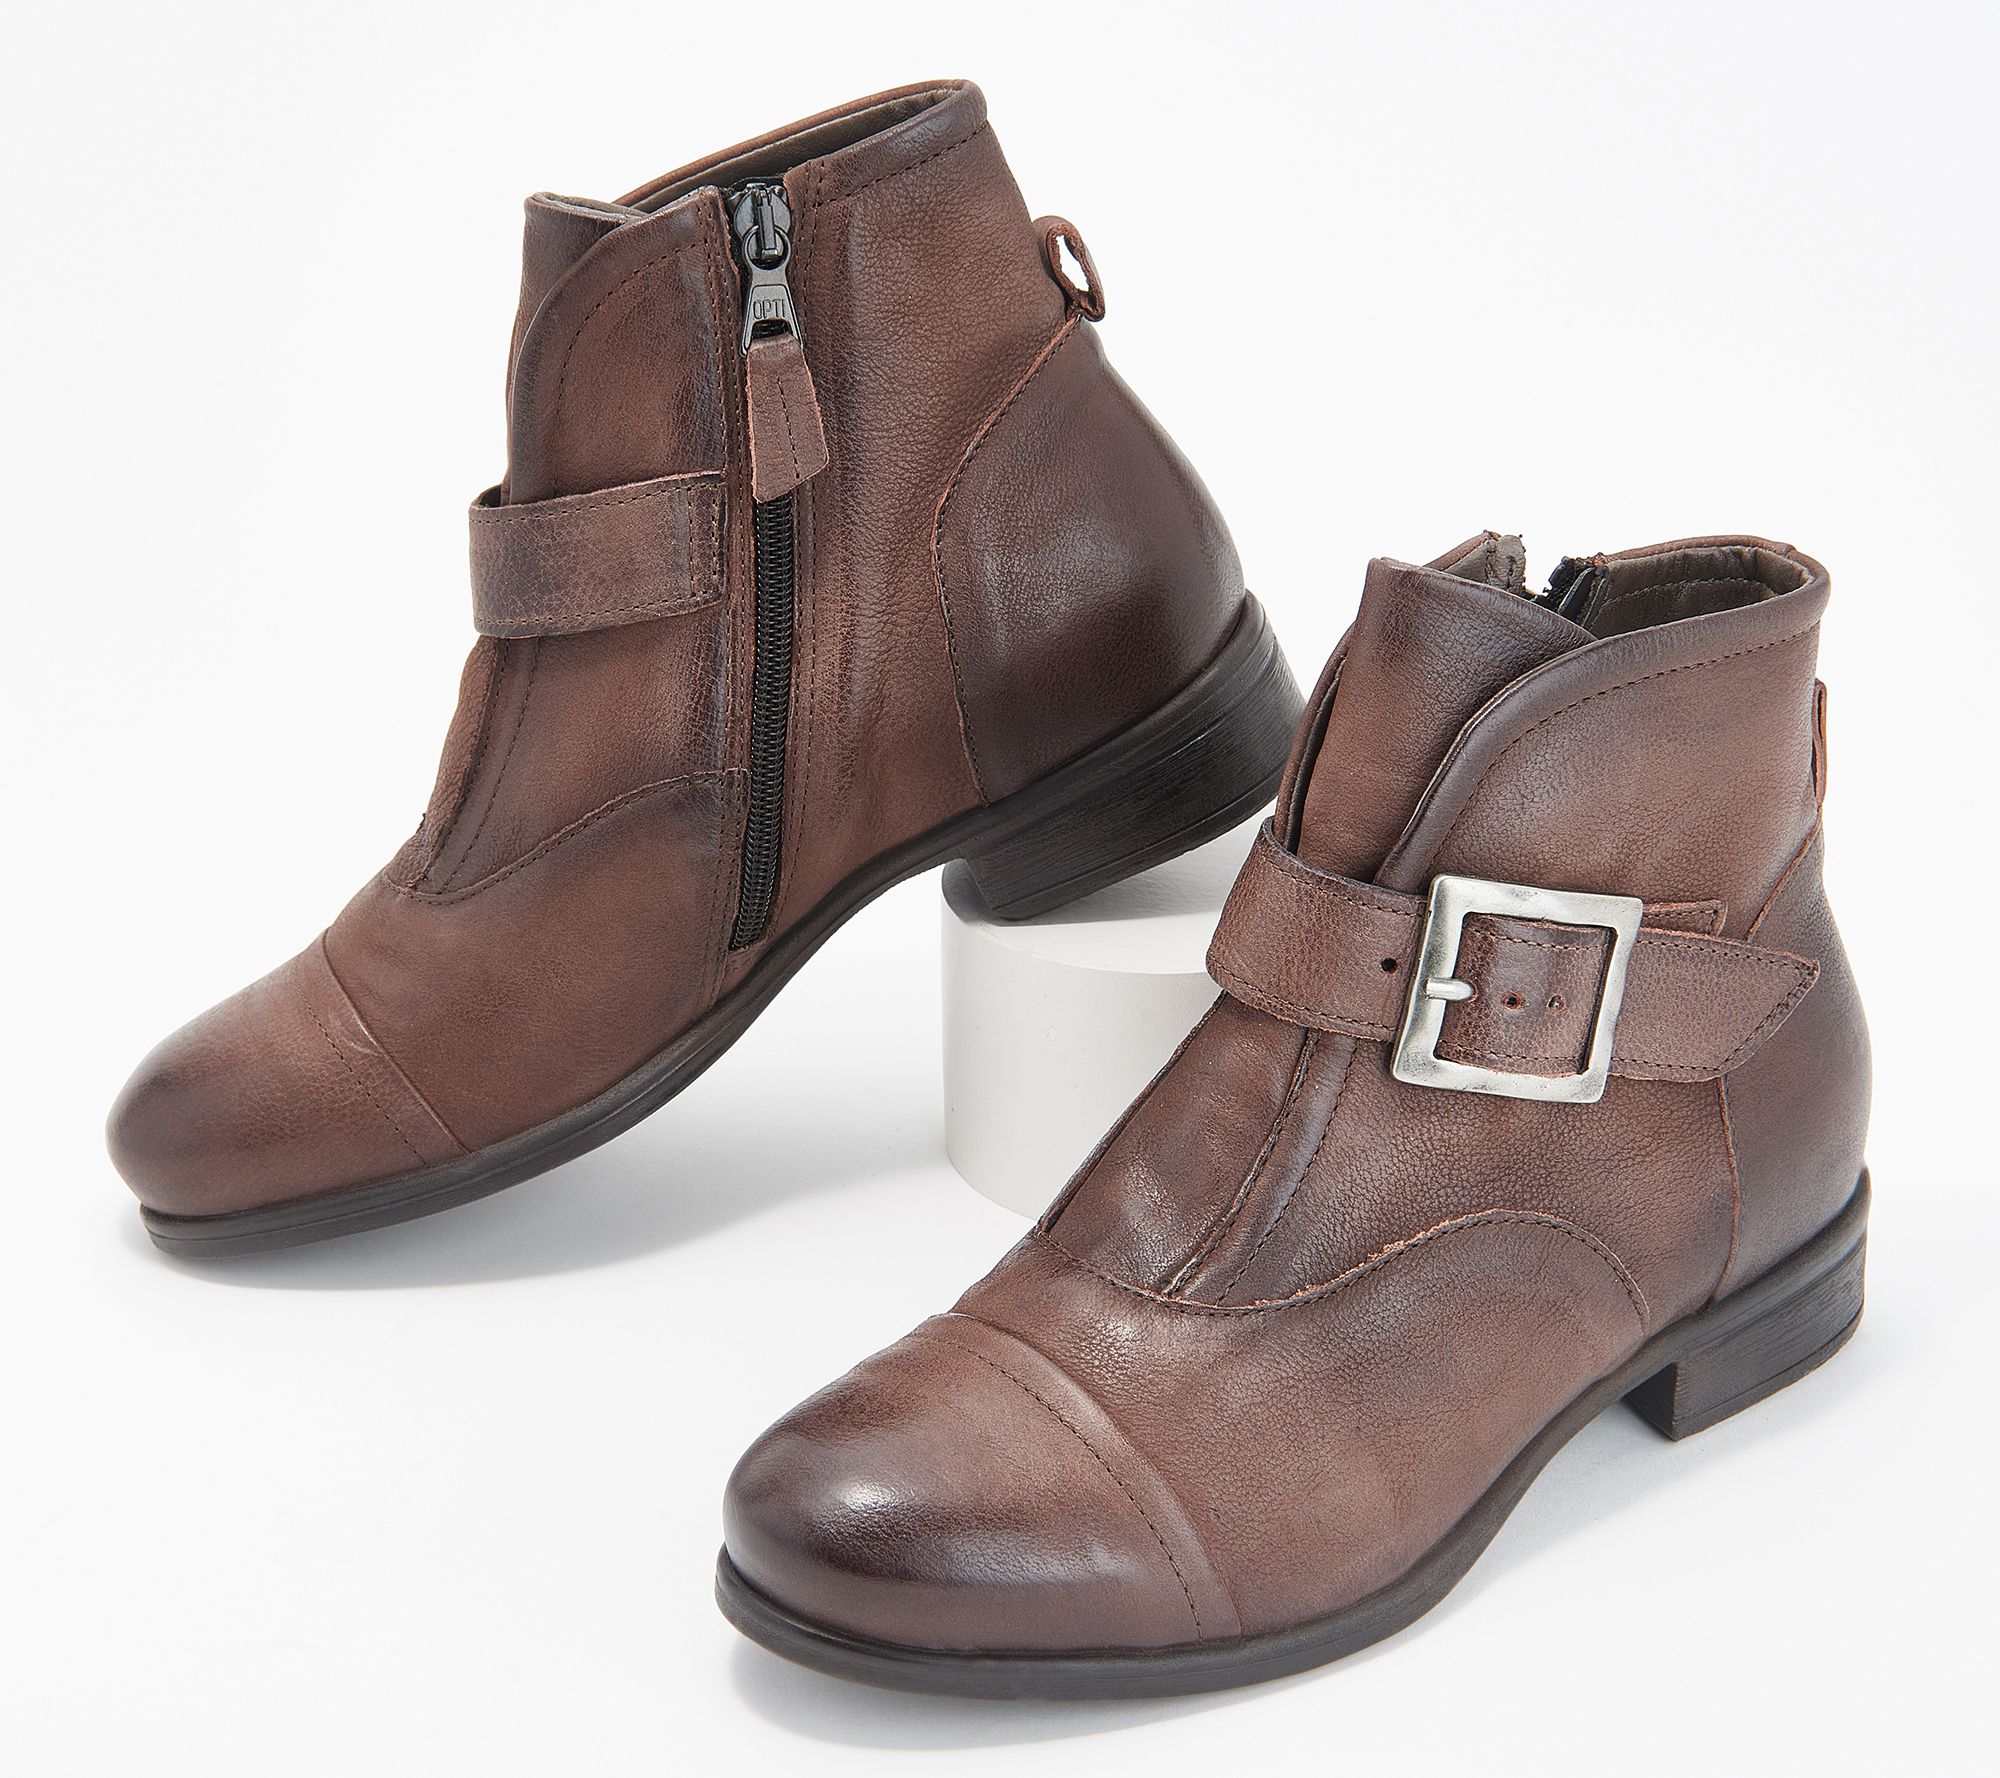 Miz Mooz Leather Side-Tie Ankle Boots - Baxter 